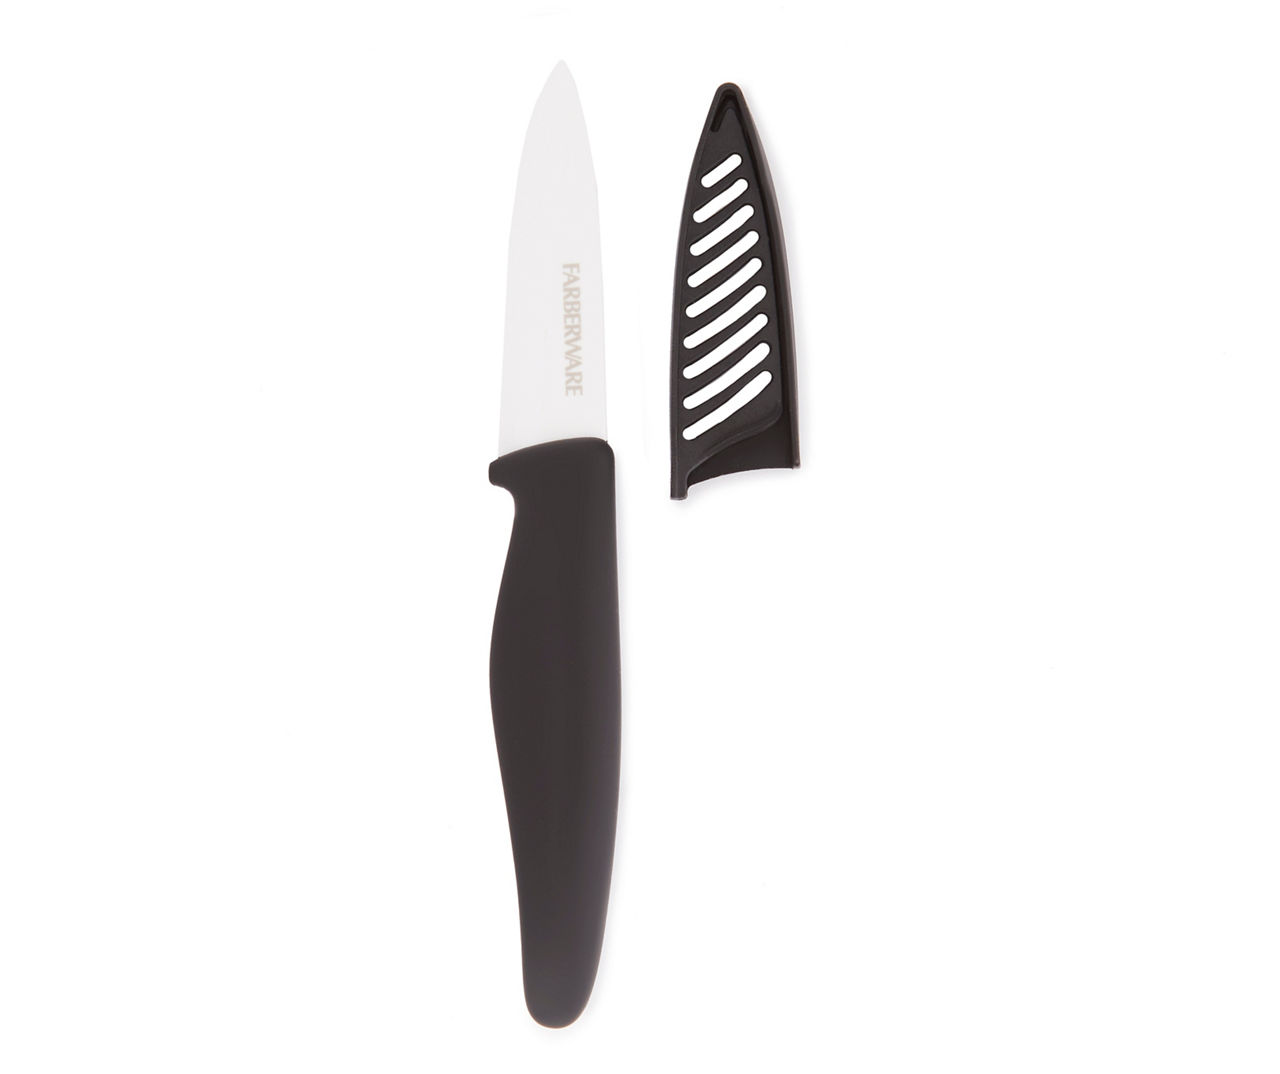 Farberware Ceramic Pairing Knife with Blade Cover